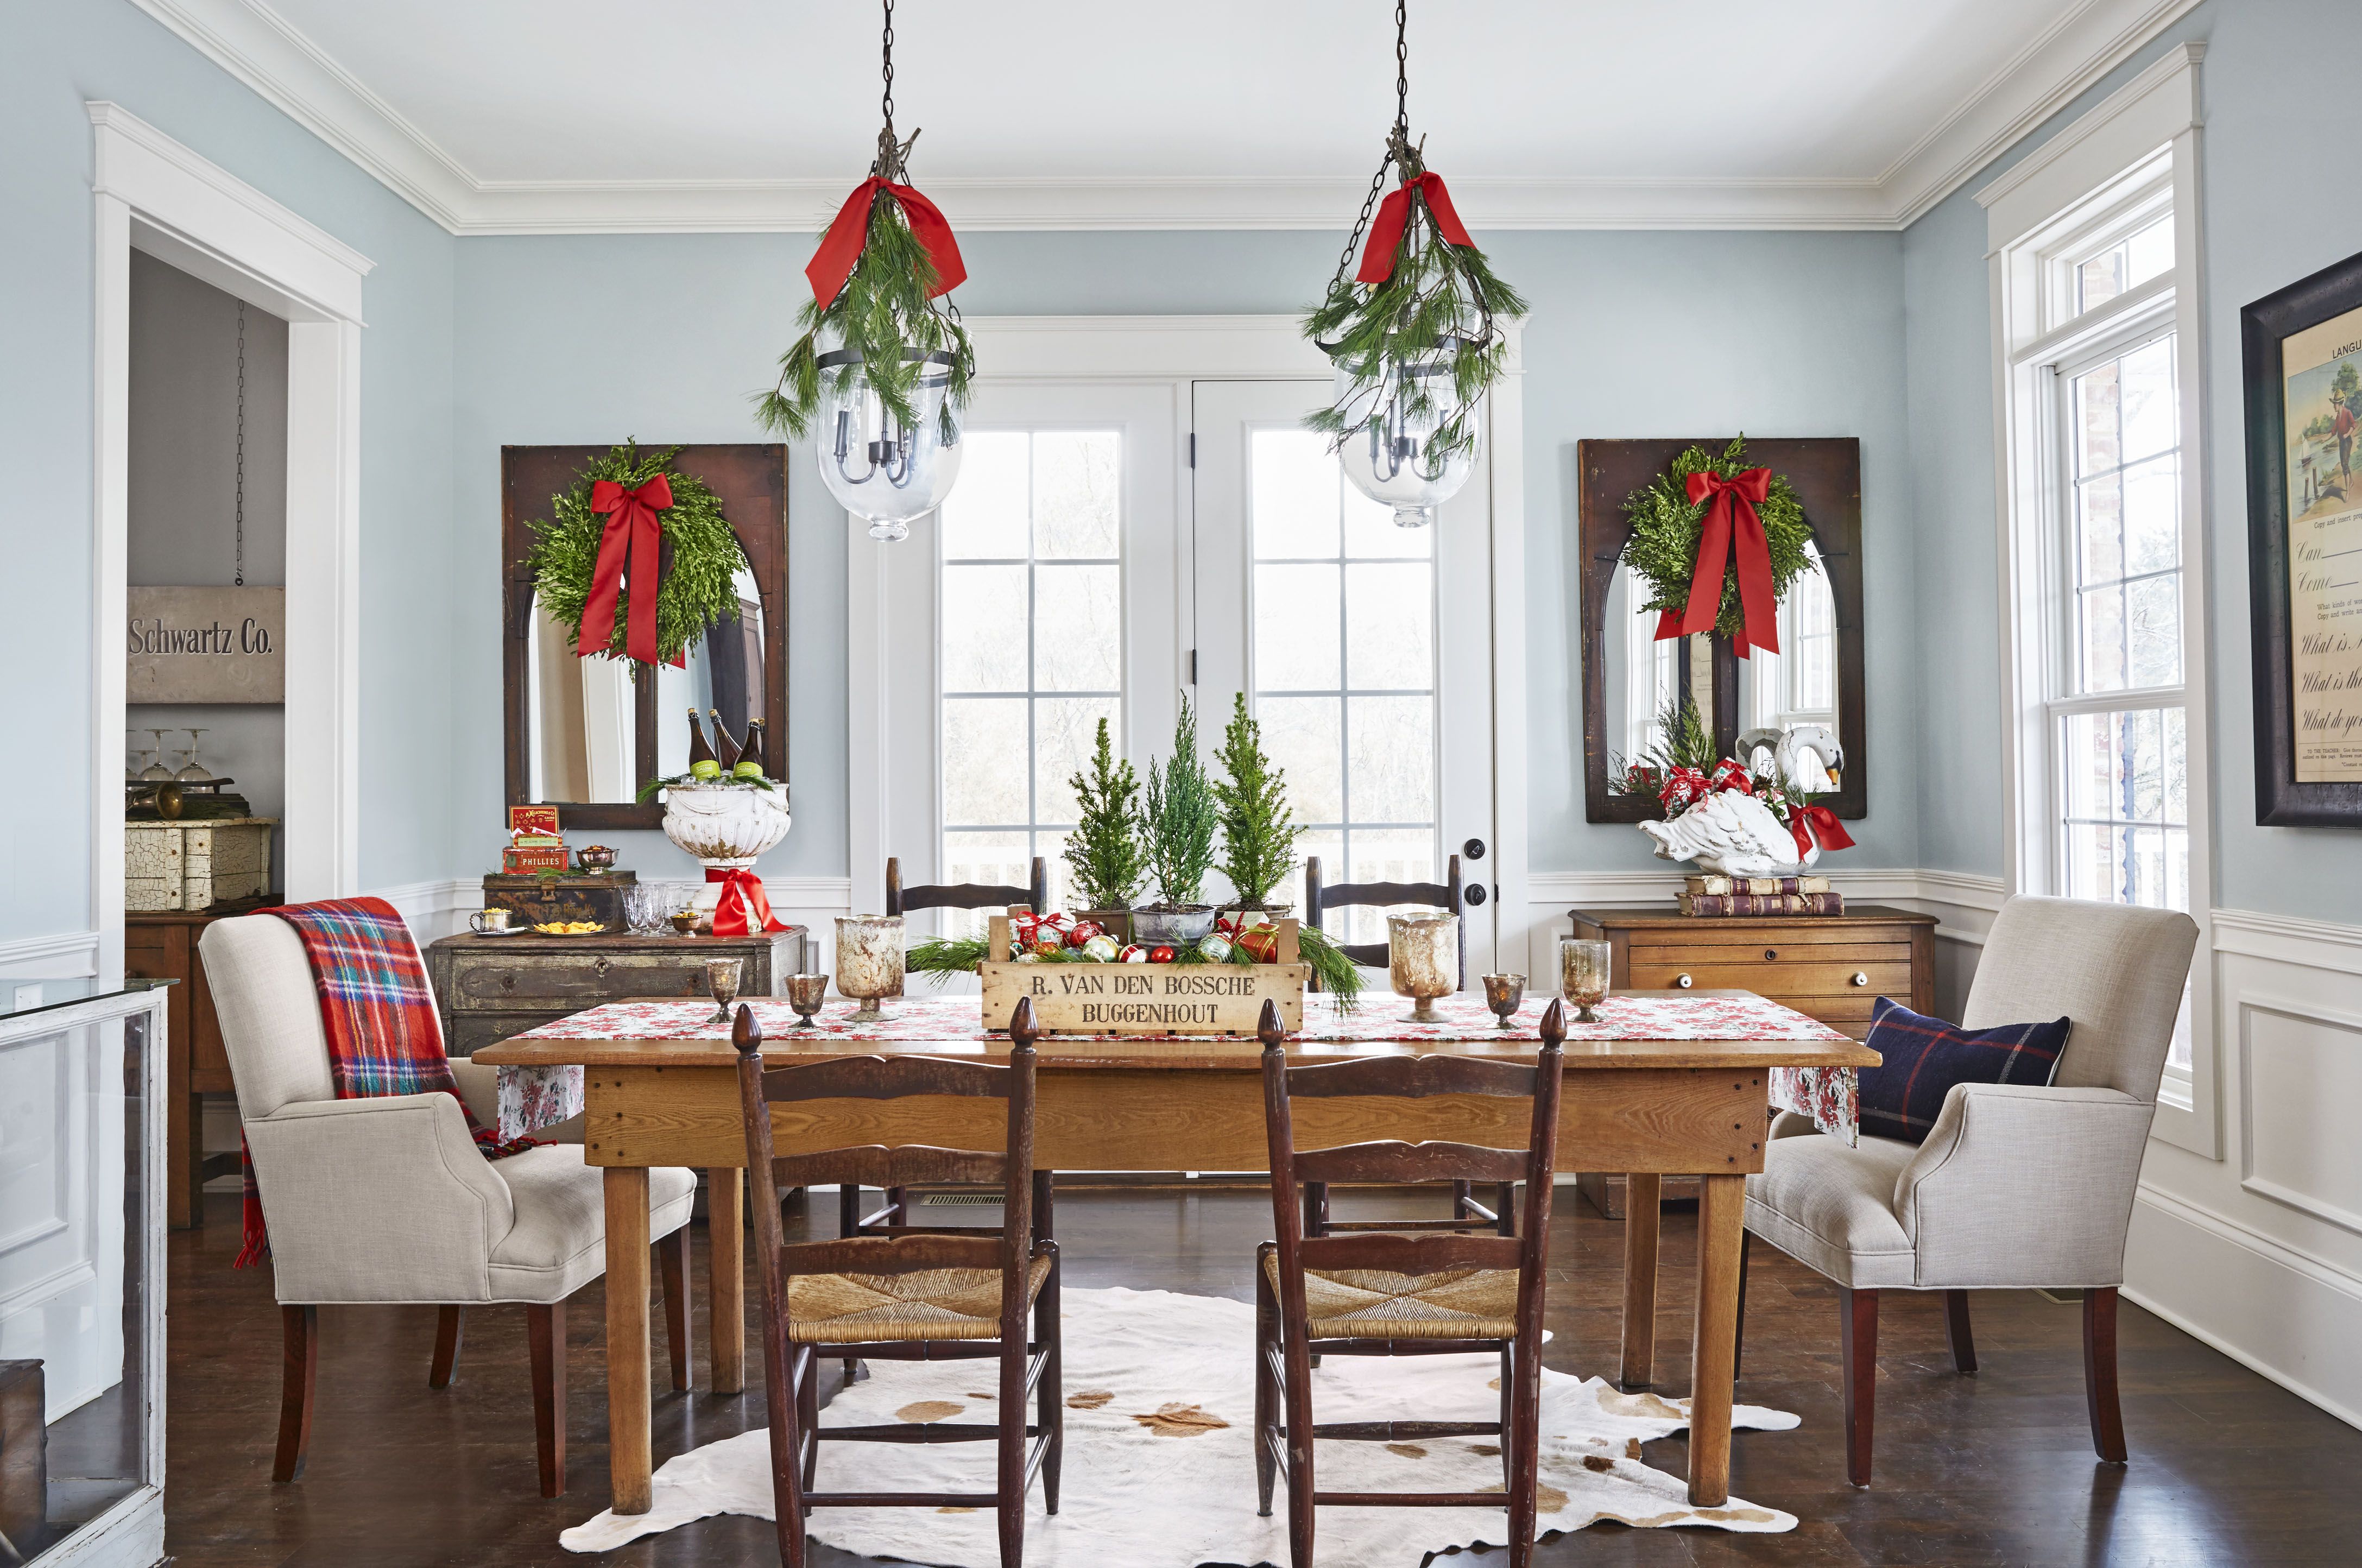 Kitchen Christmas decor ideas – 25 festive design tips